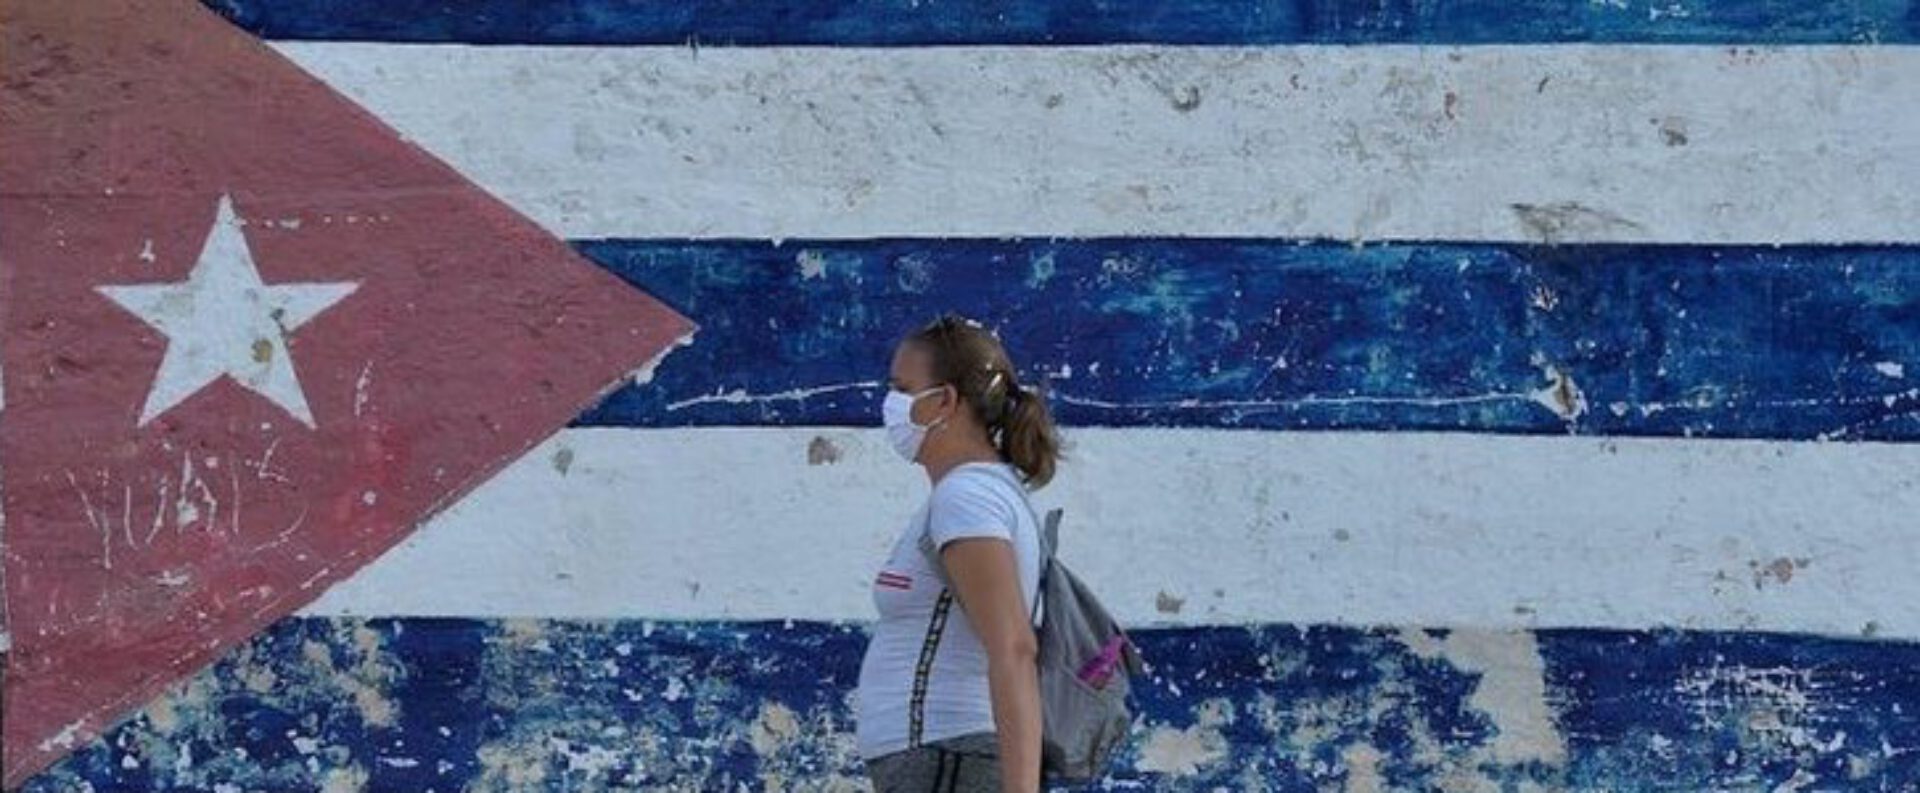 Havanna-Initiative